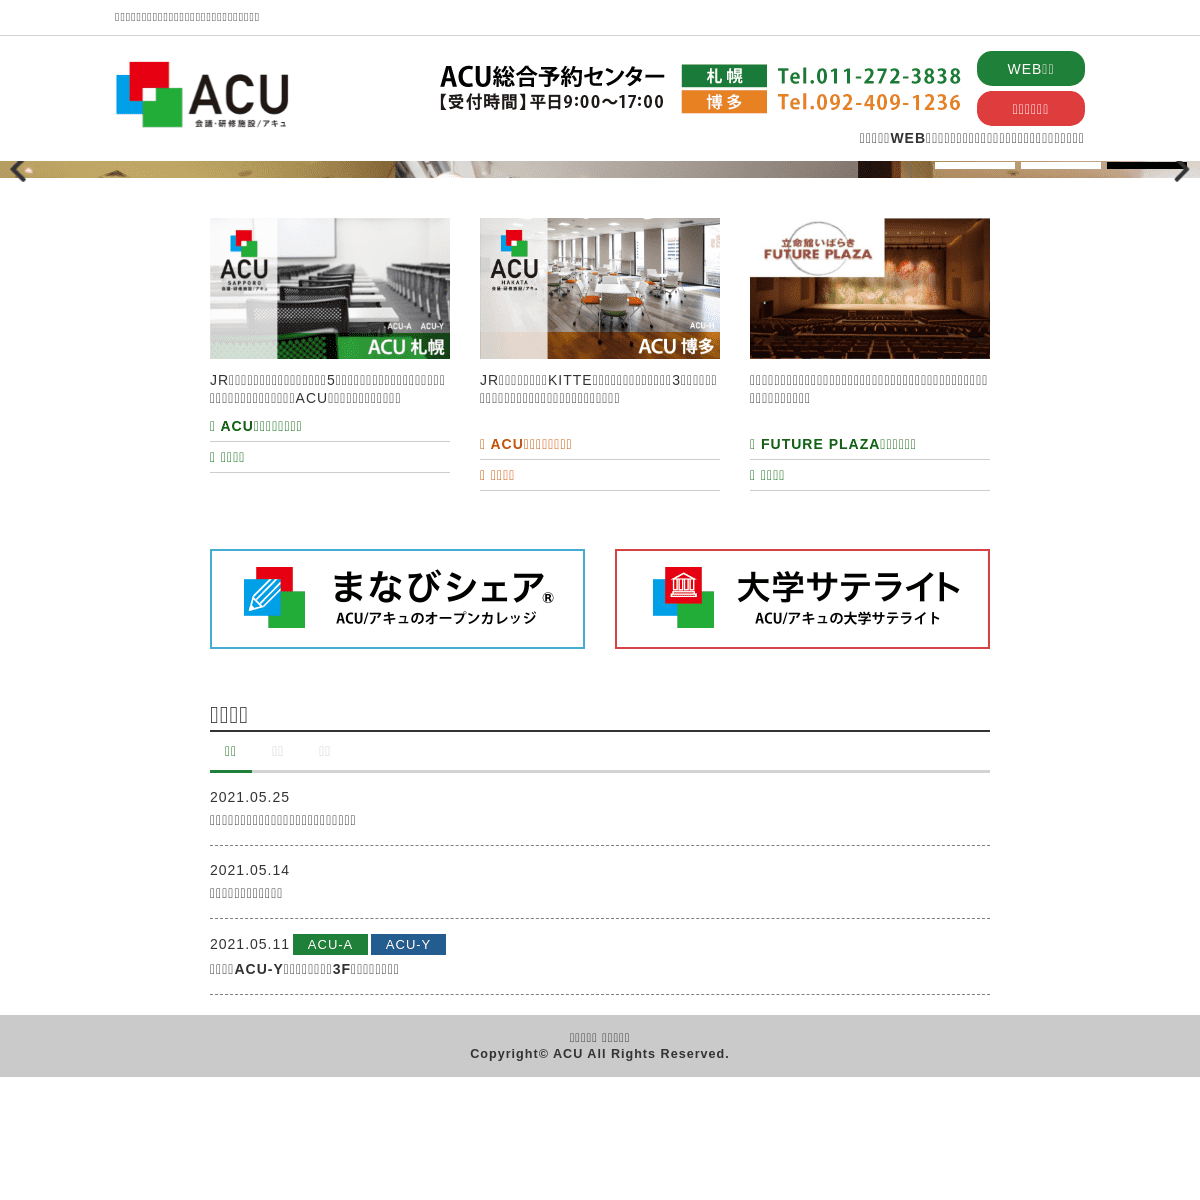 A complete backup of https://acu-h.jp